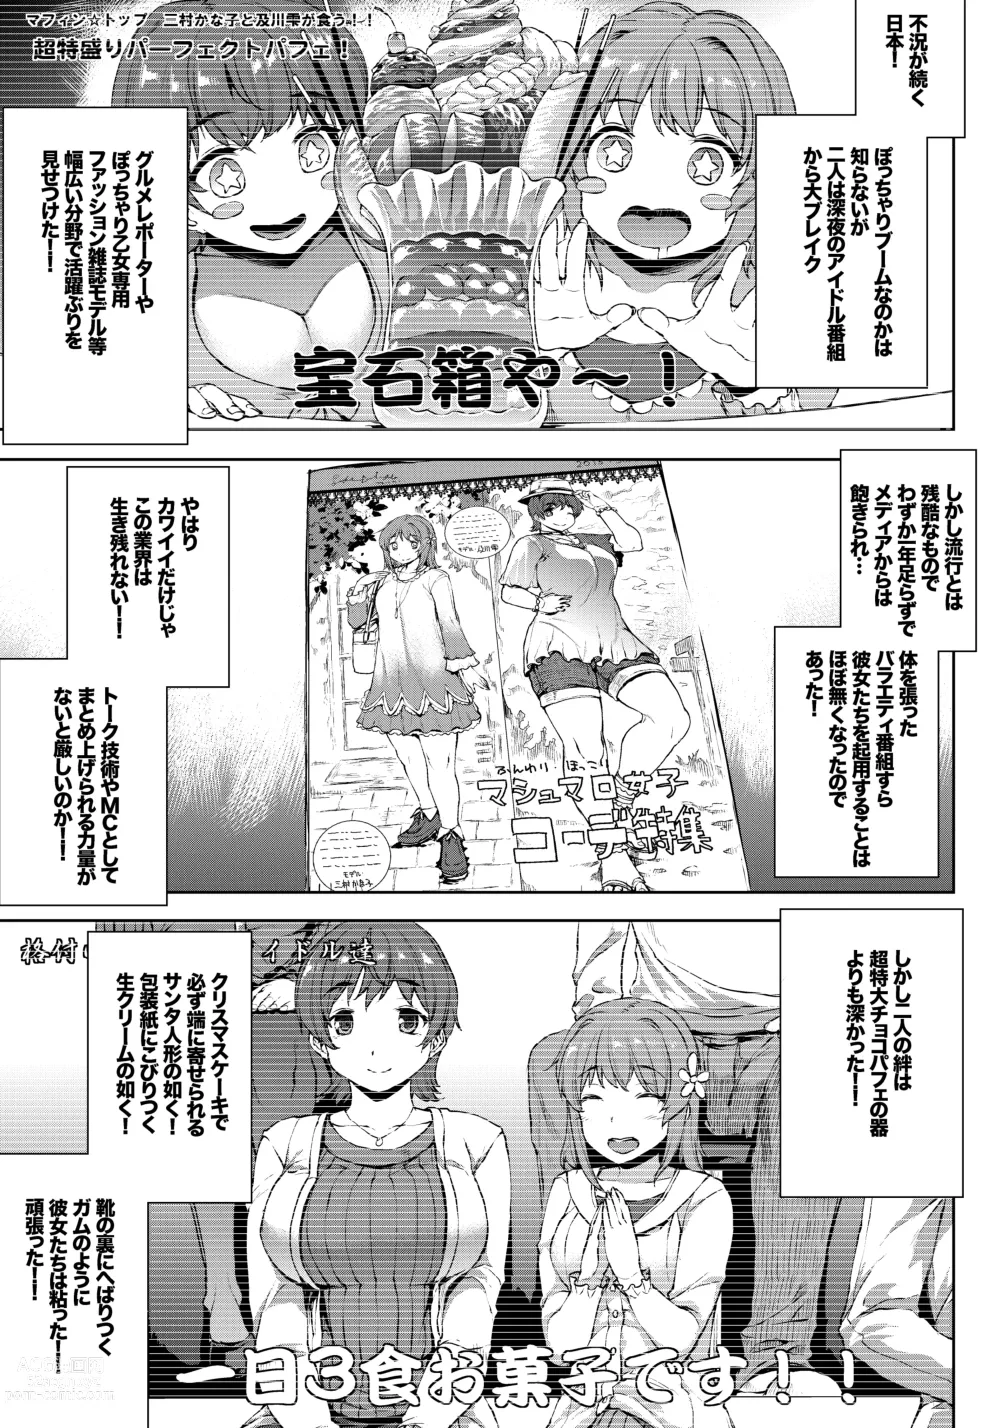 Page 9 of doujinshi Muffin☆Top!